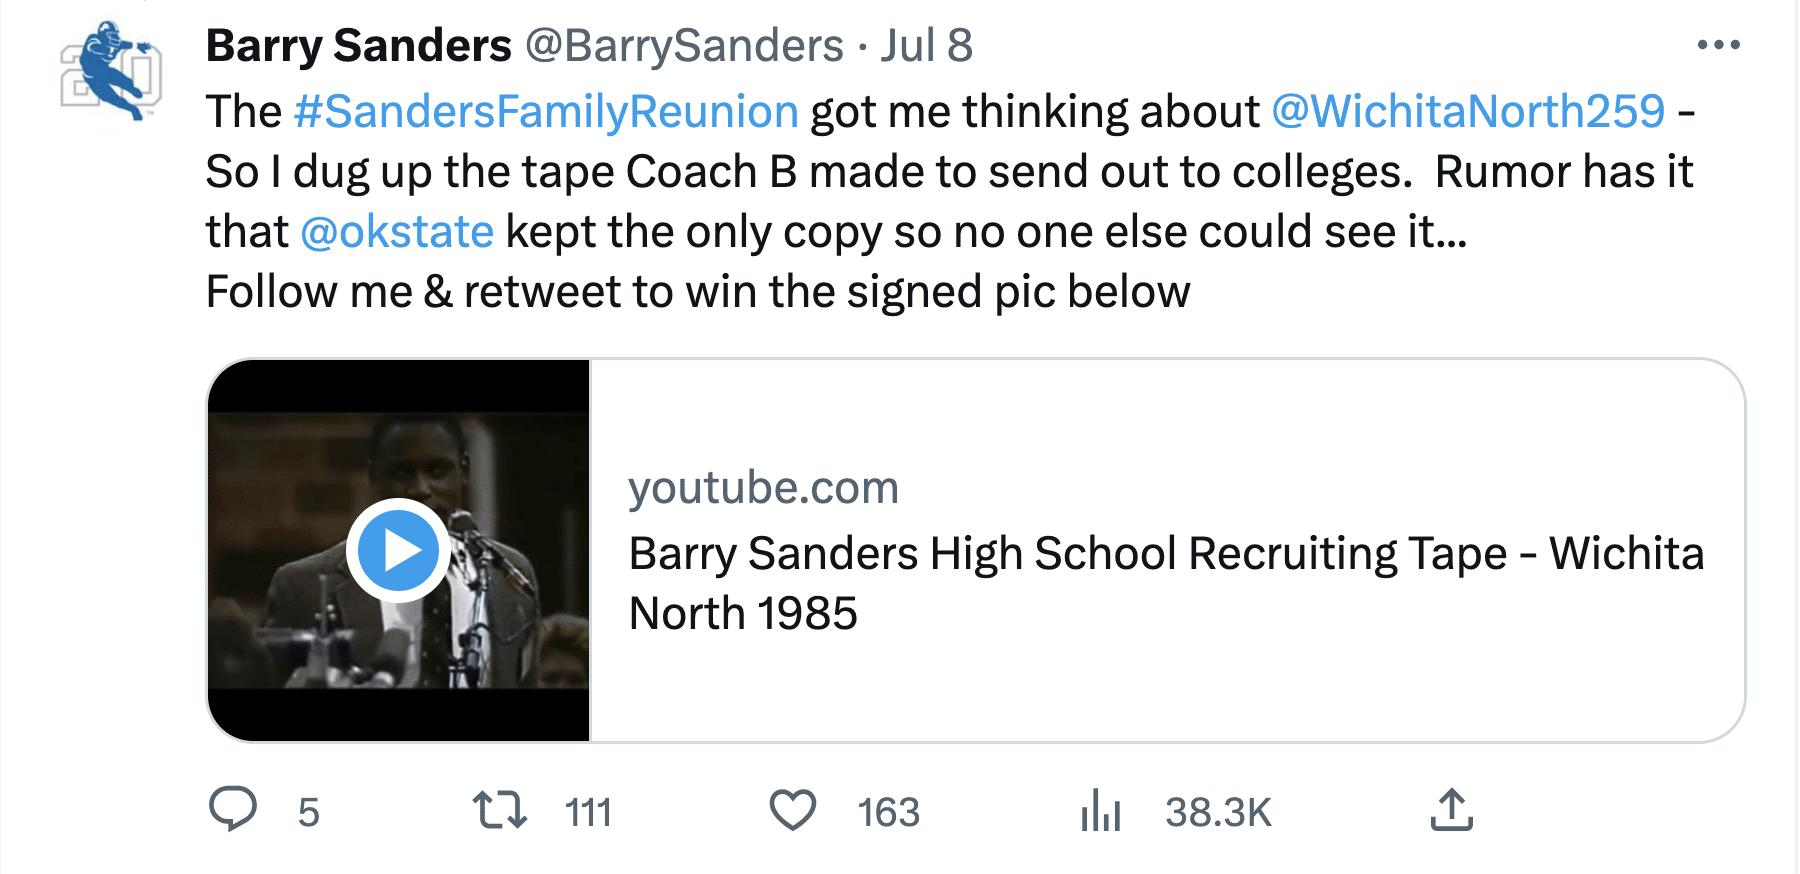 Barry Sanders Barry Sanders High School Recruiting